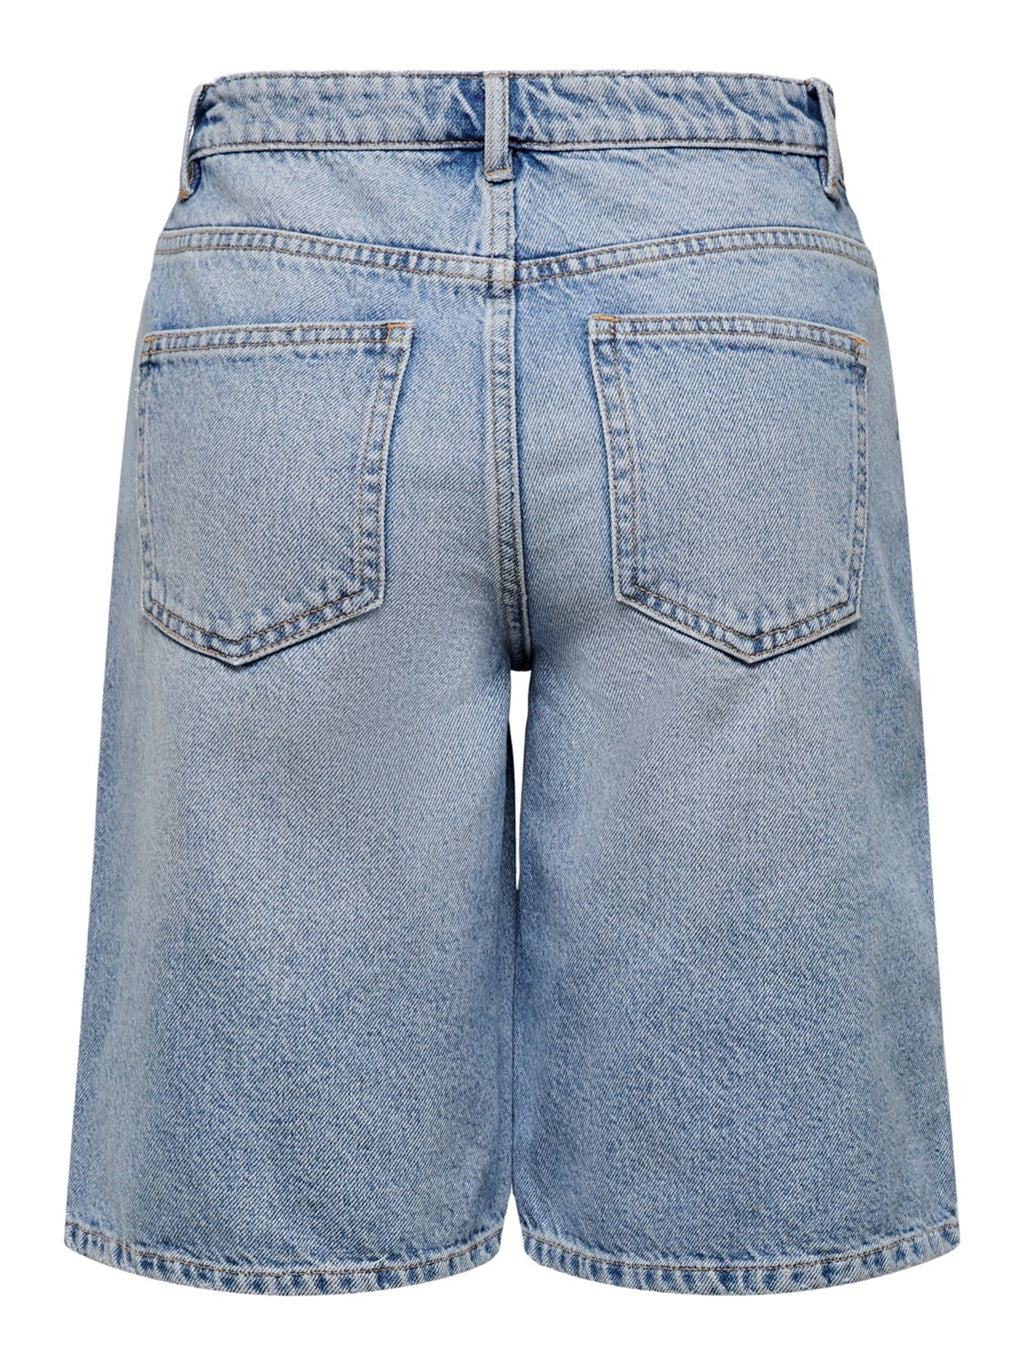 Pantalones cortos de mezclilla ancho de cintura alta Sonny - azul claro